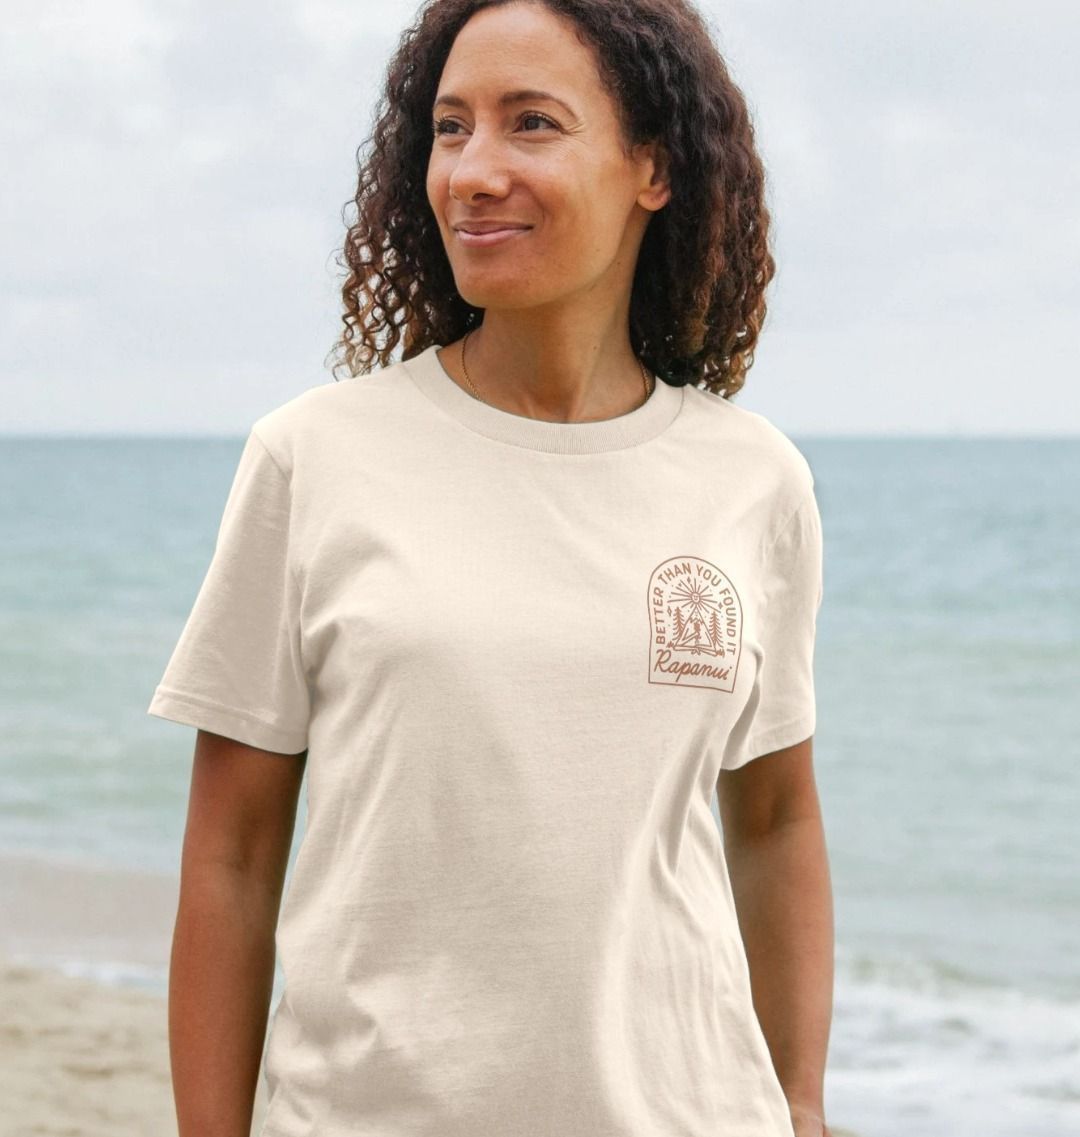 Women's Better Than You Found It T - Shirt - Printed T - shirt